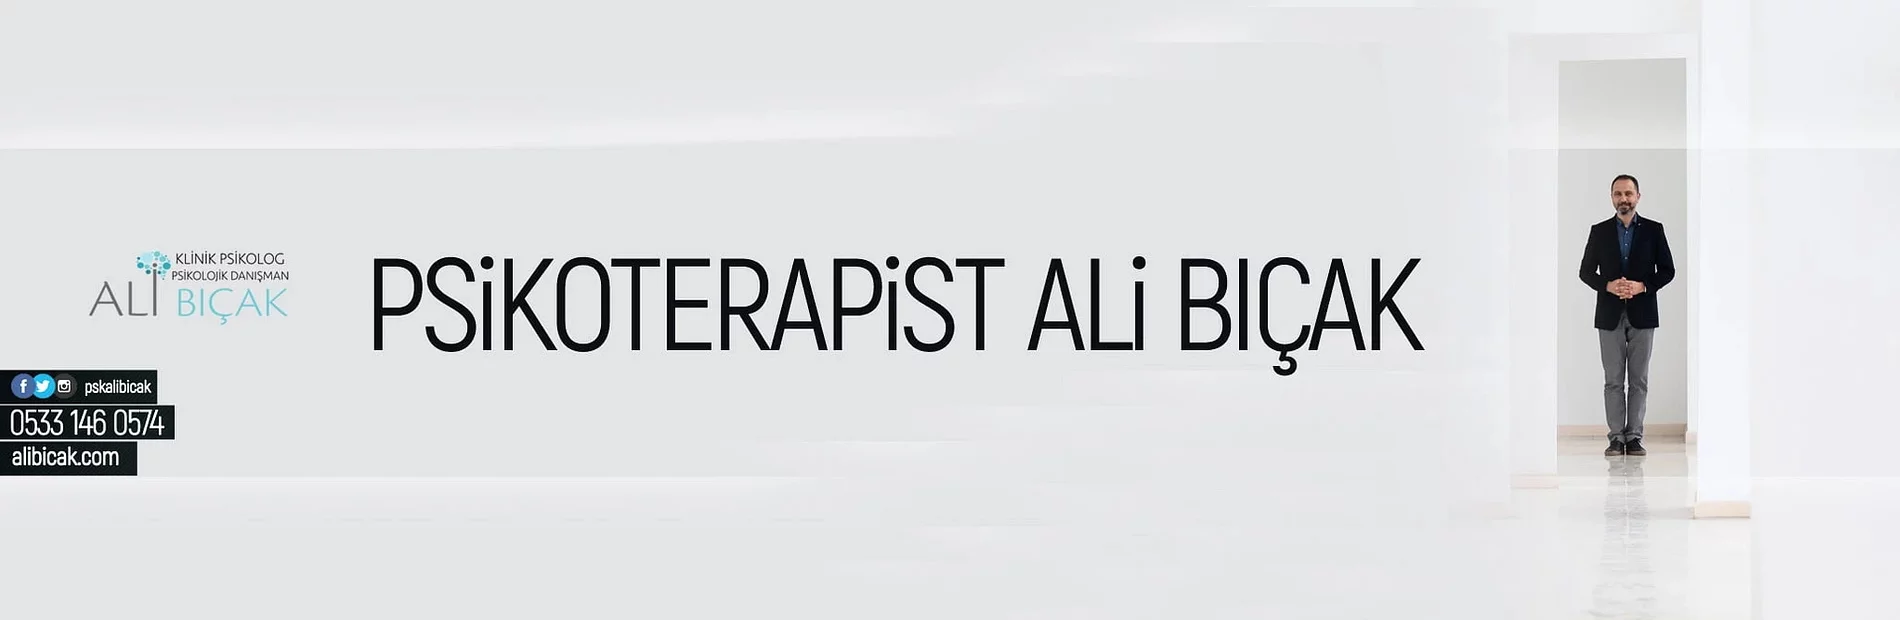 Antalya Psikolog Ali Bıçak